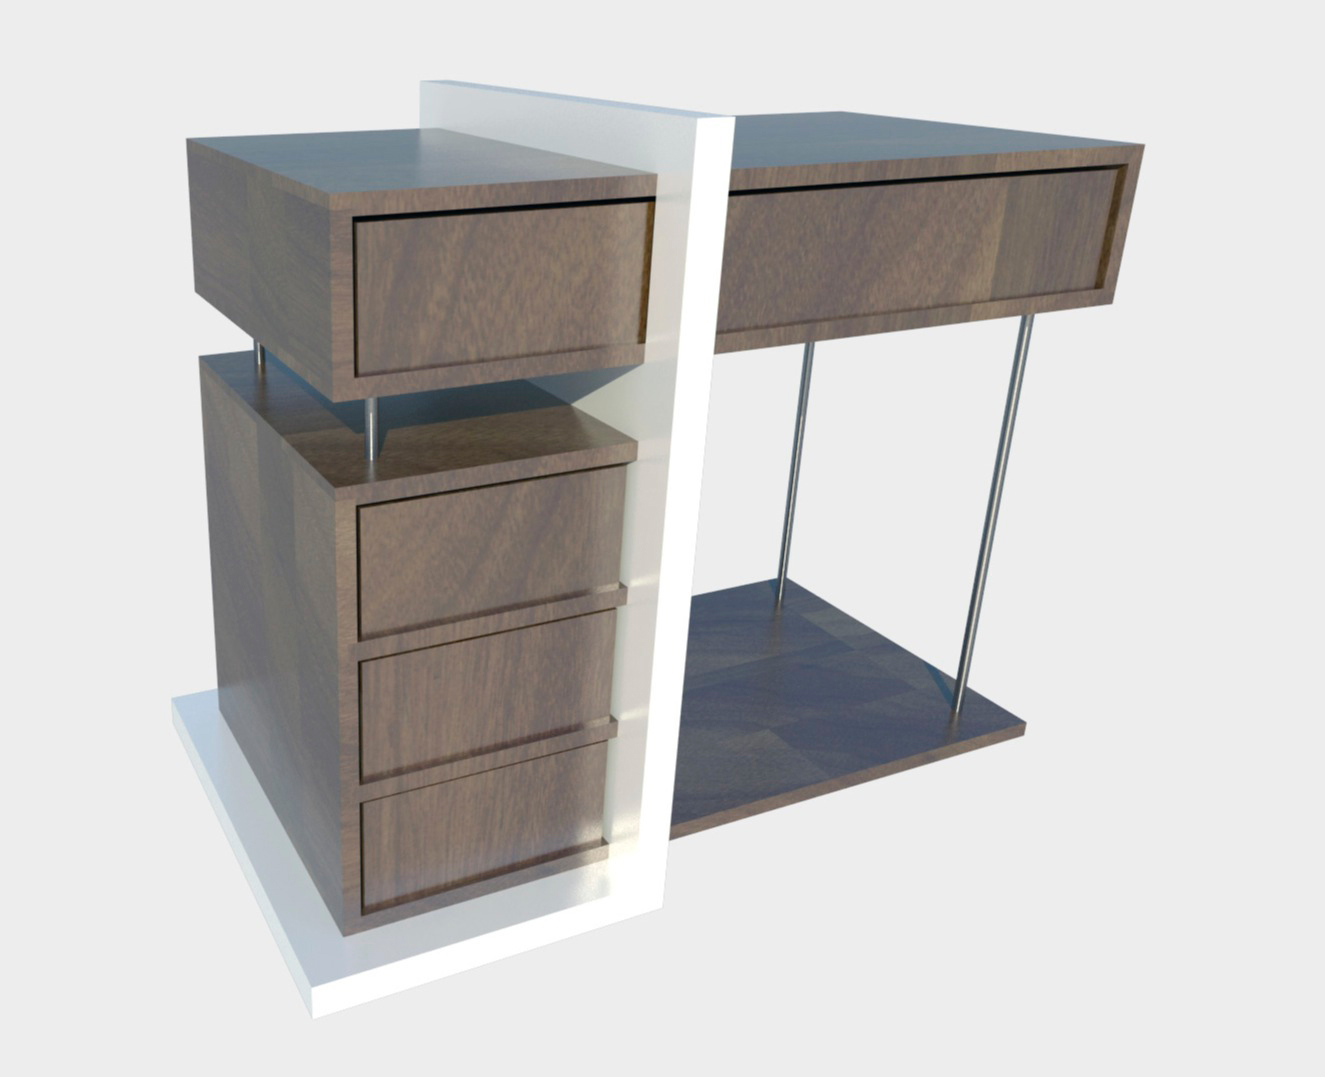 Wedged Walnut Cabinet: Furniture Design – Emerald Seven